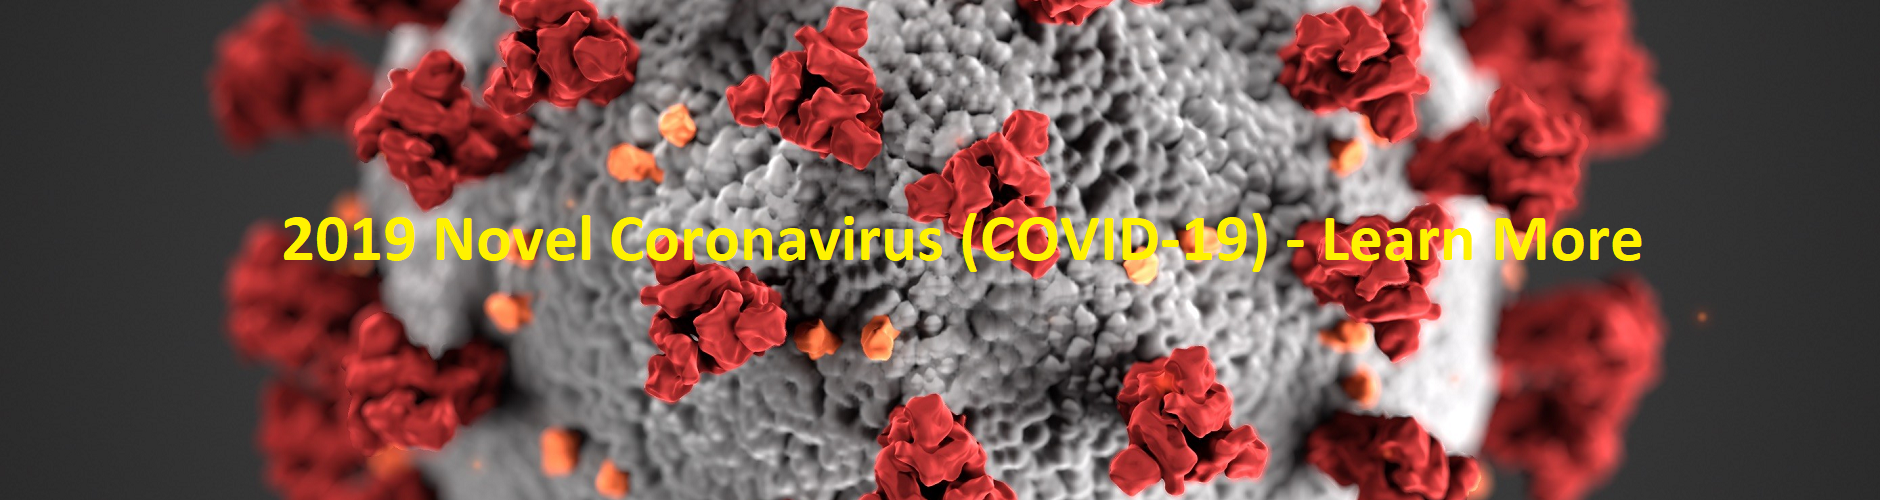 2019 Novel Coronavirus (COVID-19)